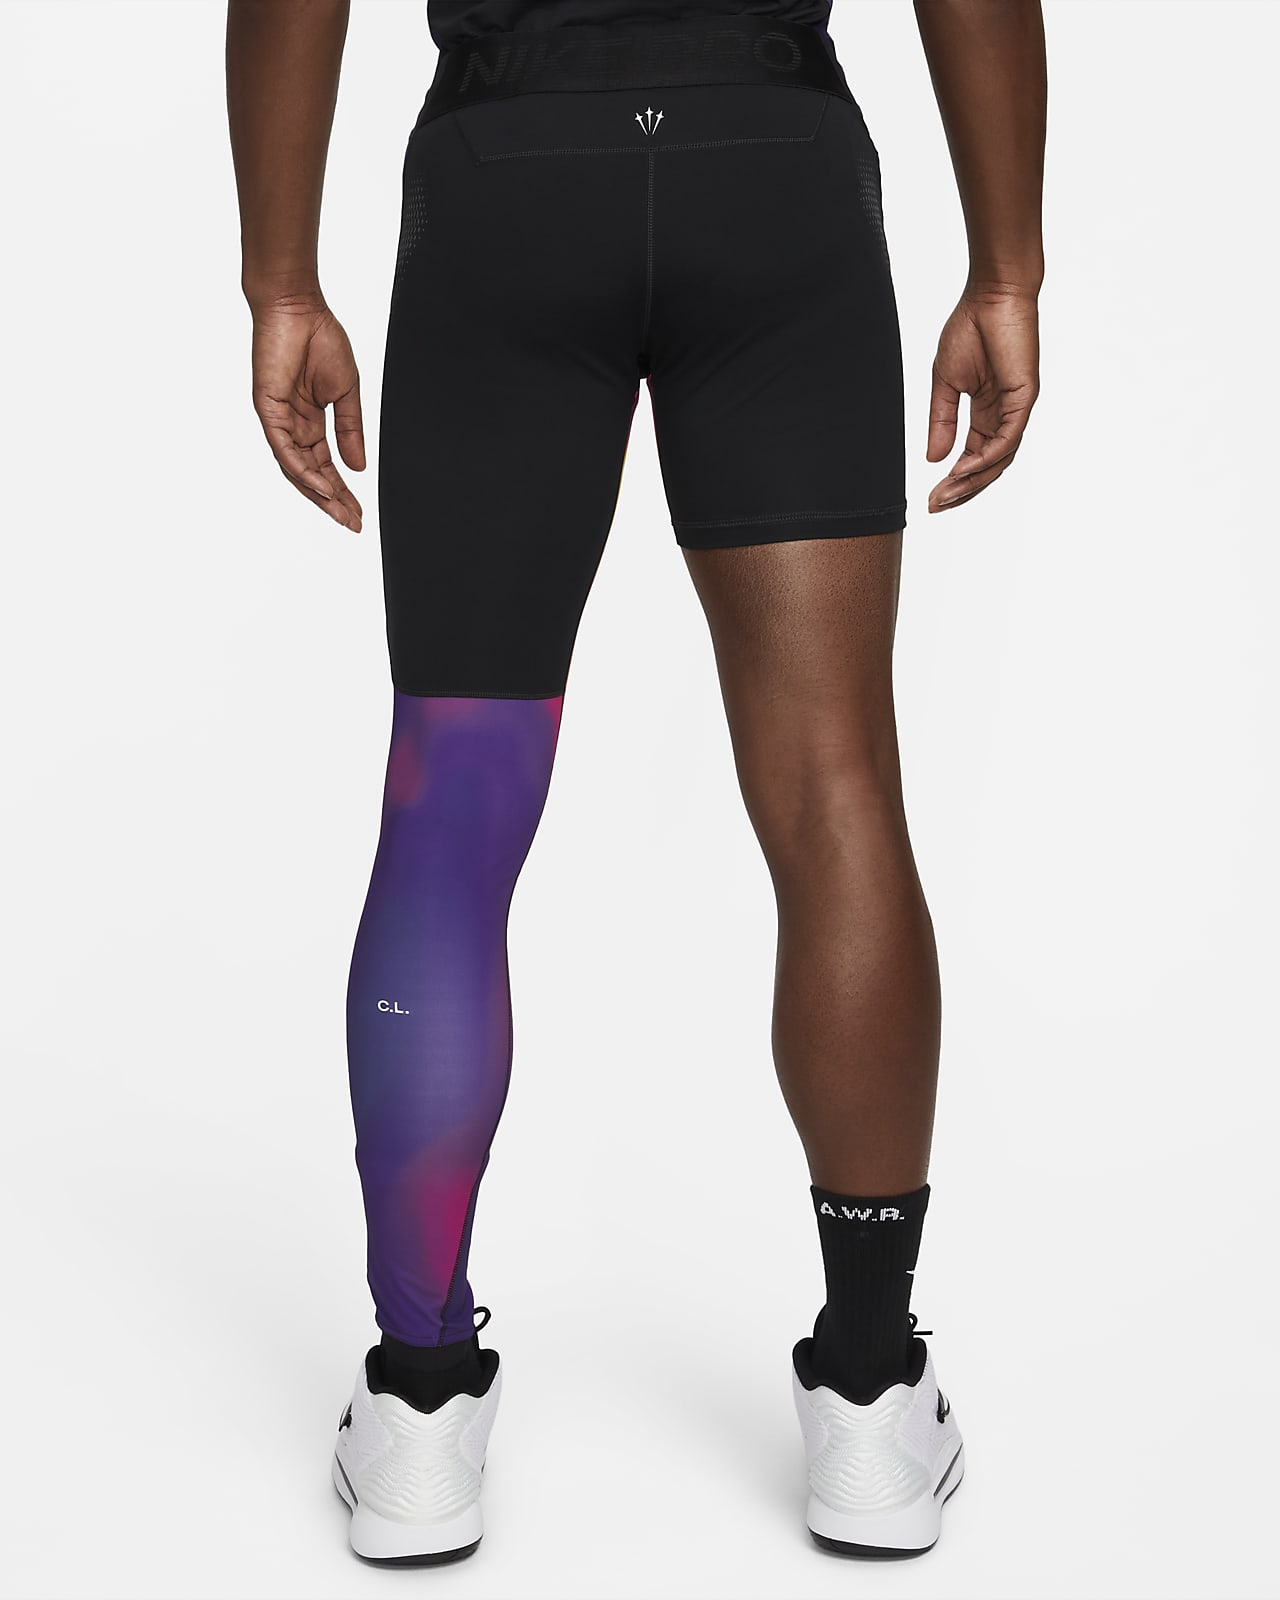 NOCTA Men's Single-Leg Printed Basketball Tights Nike.com